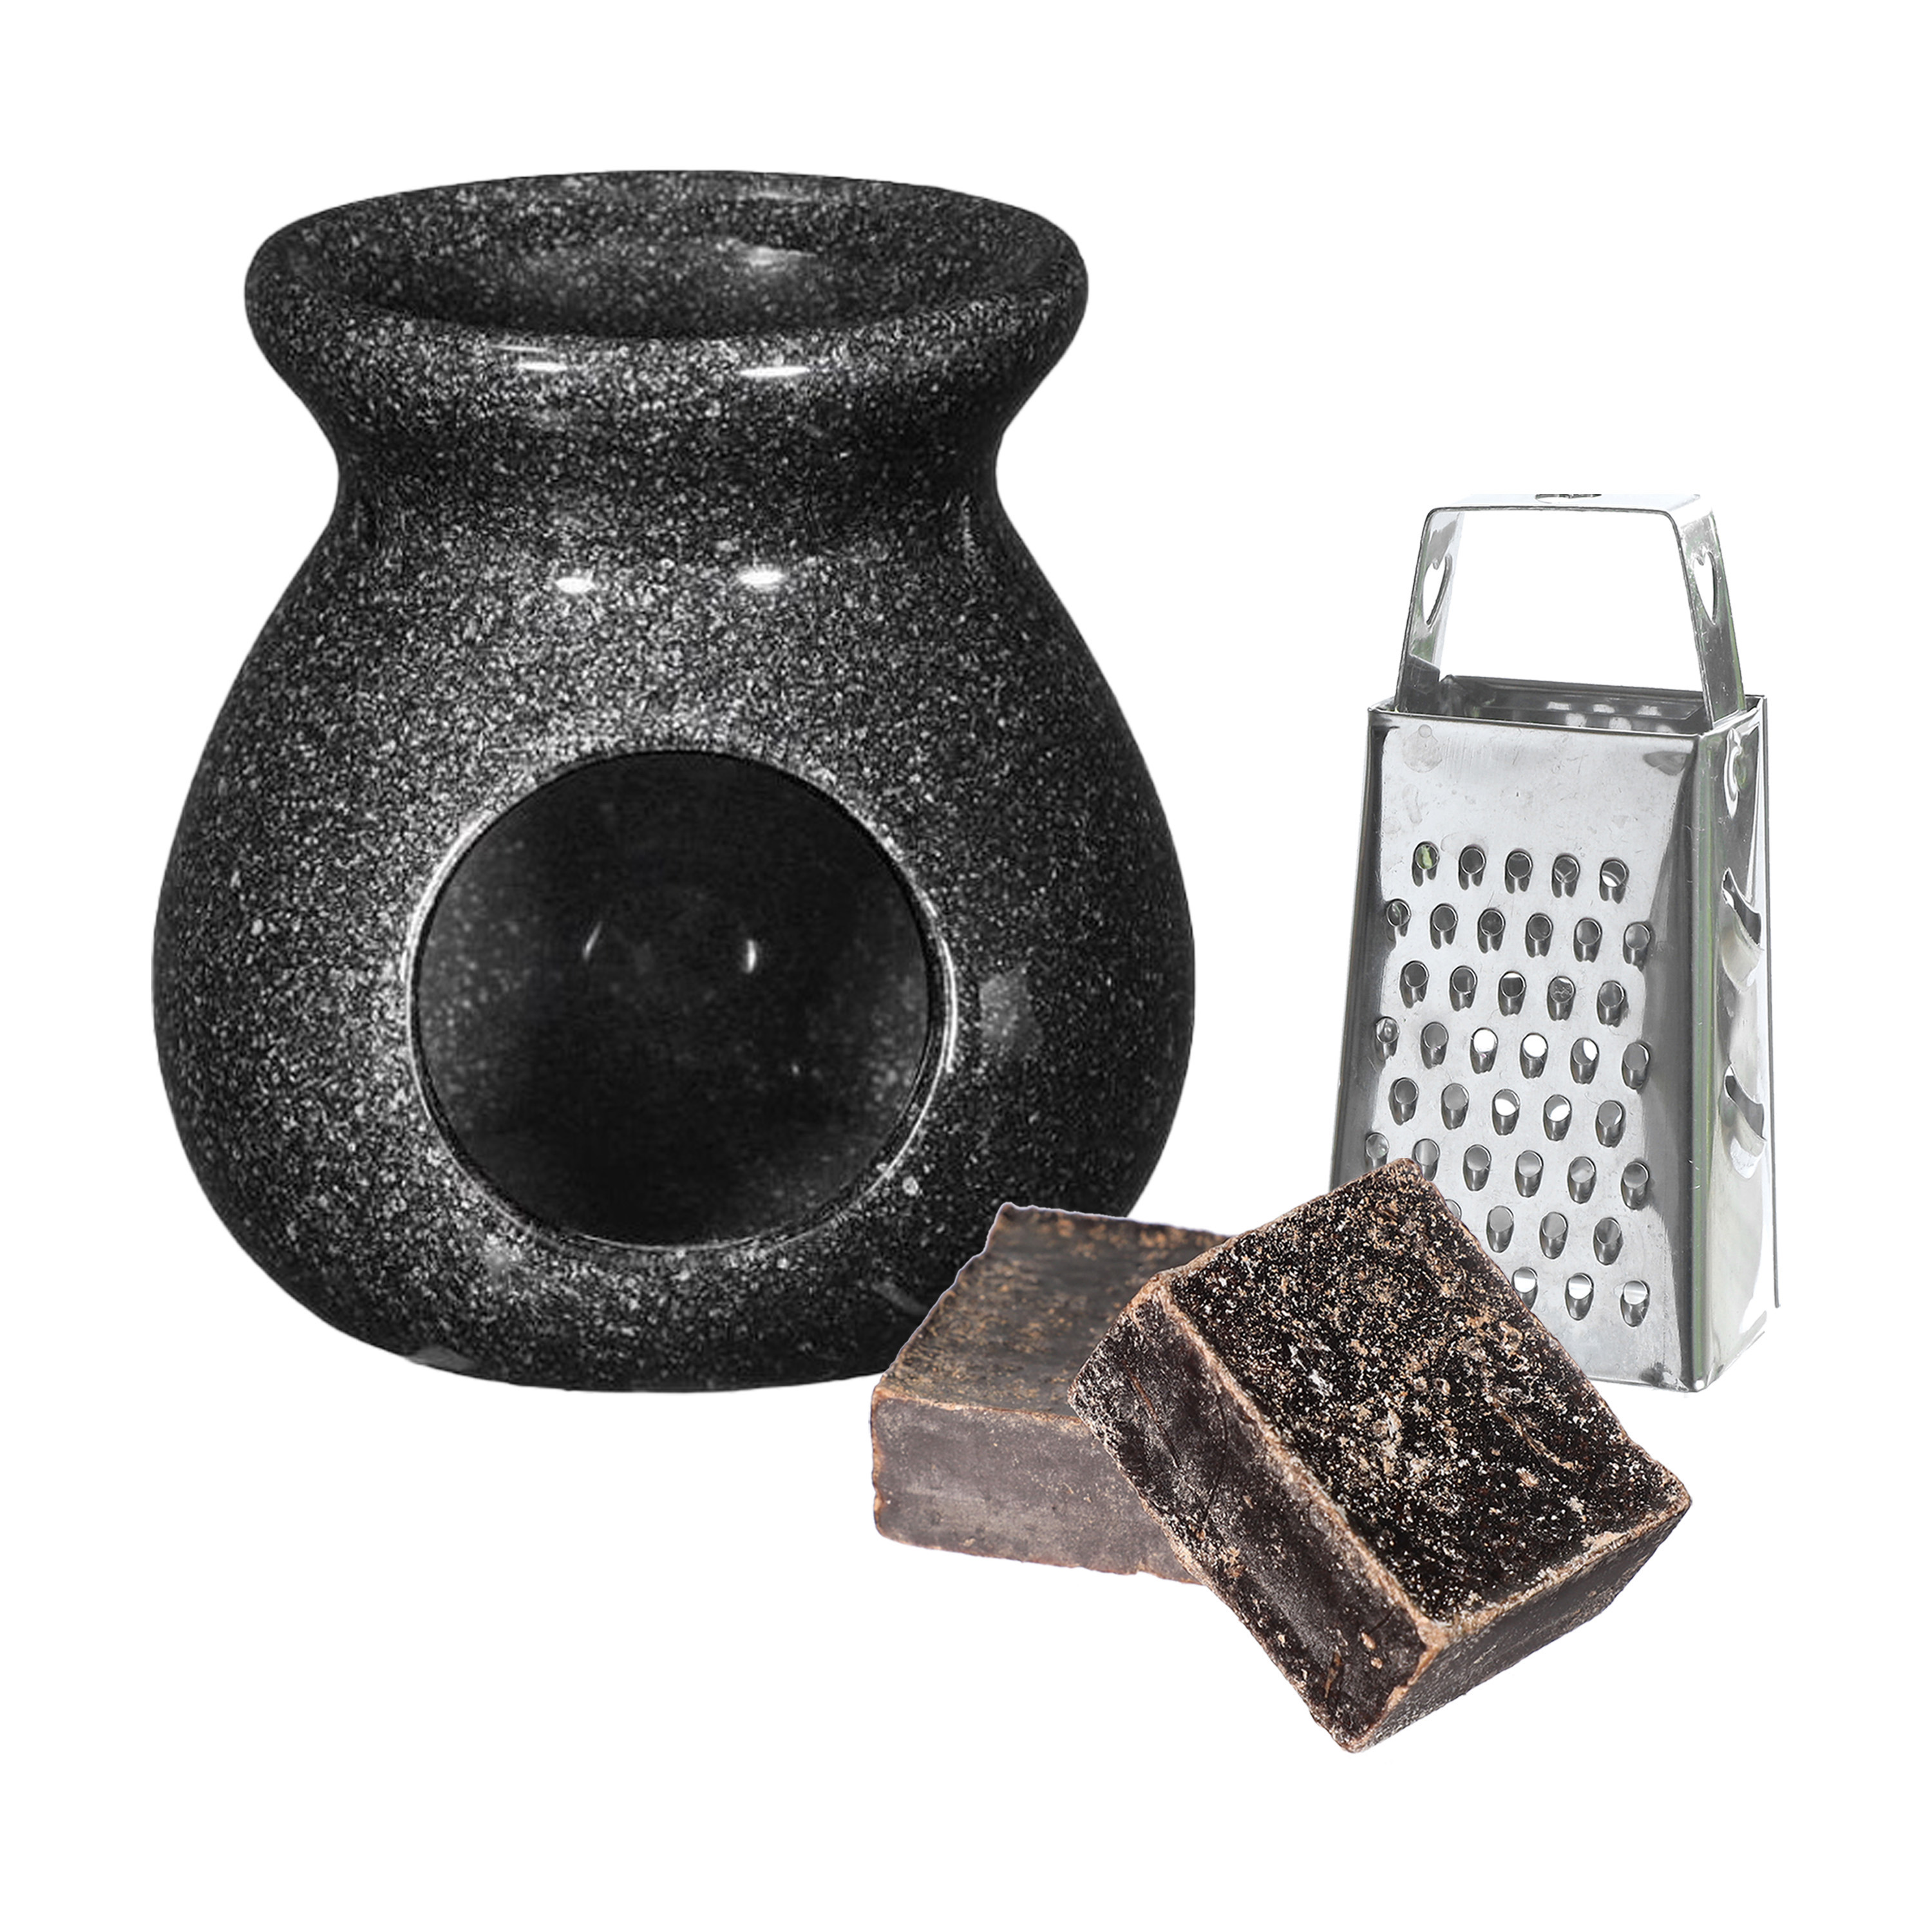 Amberblokjes-geurblokjes cadeauset ylang ylang geur inclusief geurbrander en mini rasp